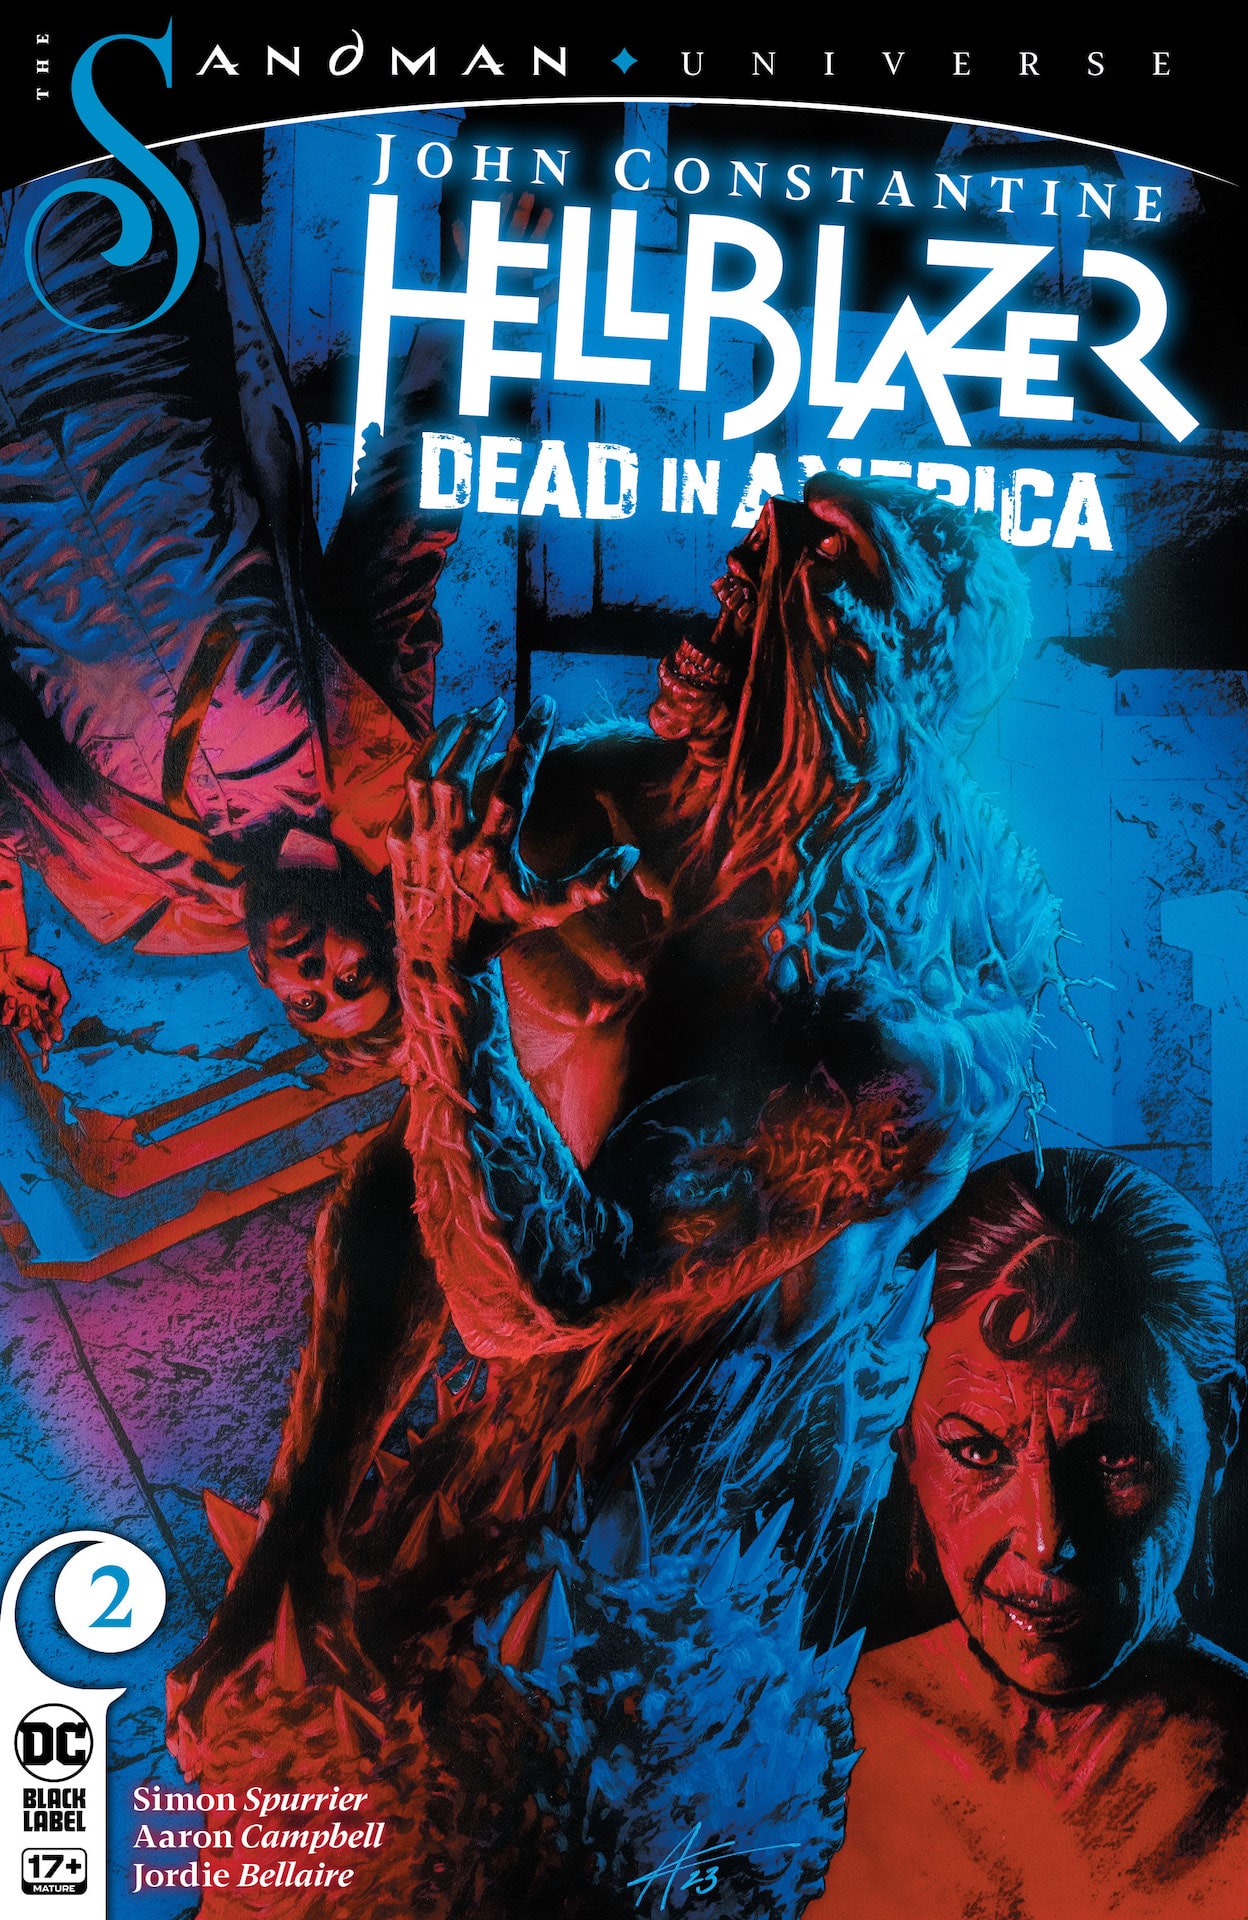 DC Preview: John Constantine, Hellblazer: Dead in America #2